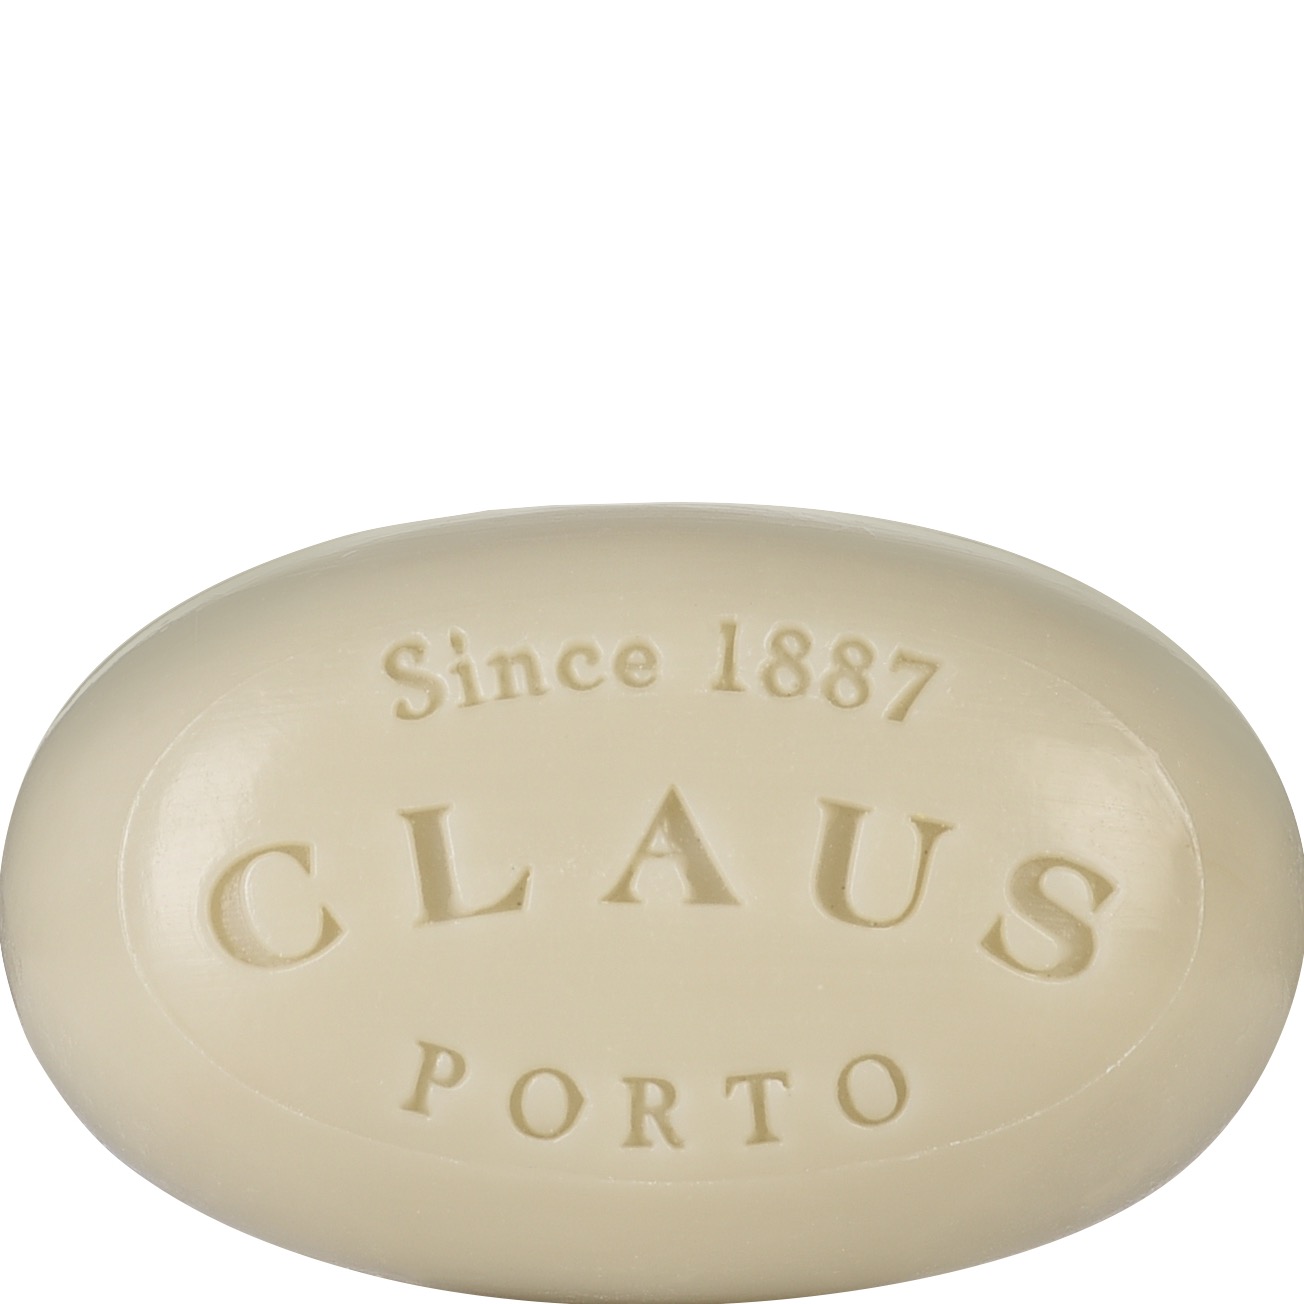 Claus Porto Soap Bar Deco Lime Basil 150g - 1.2 - CP-SP013